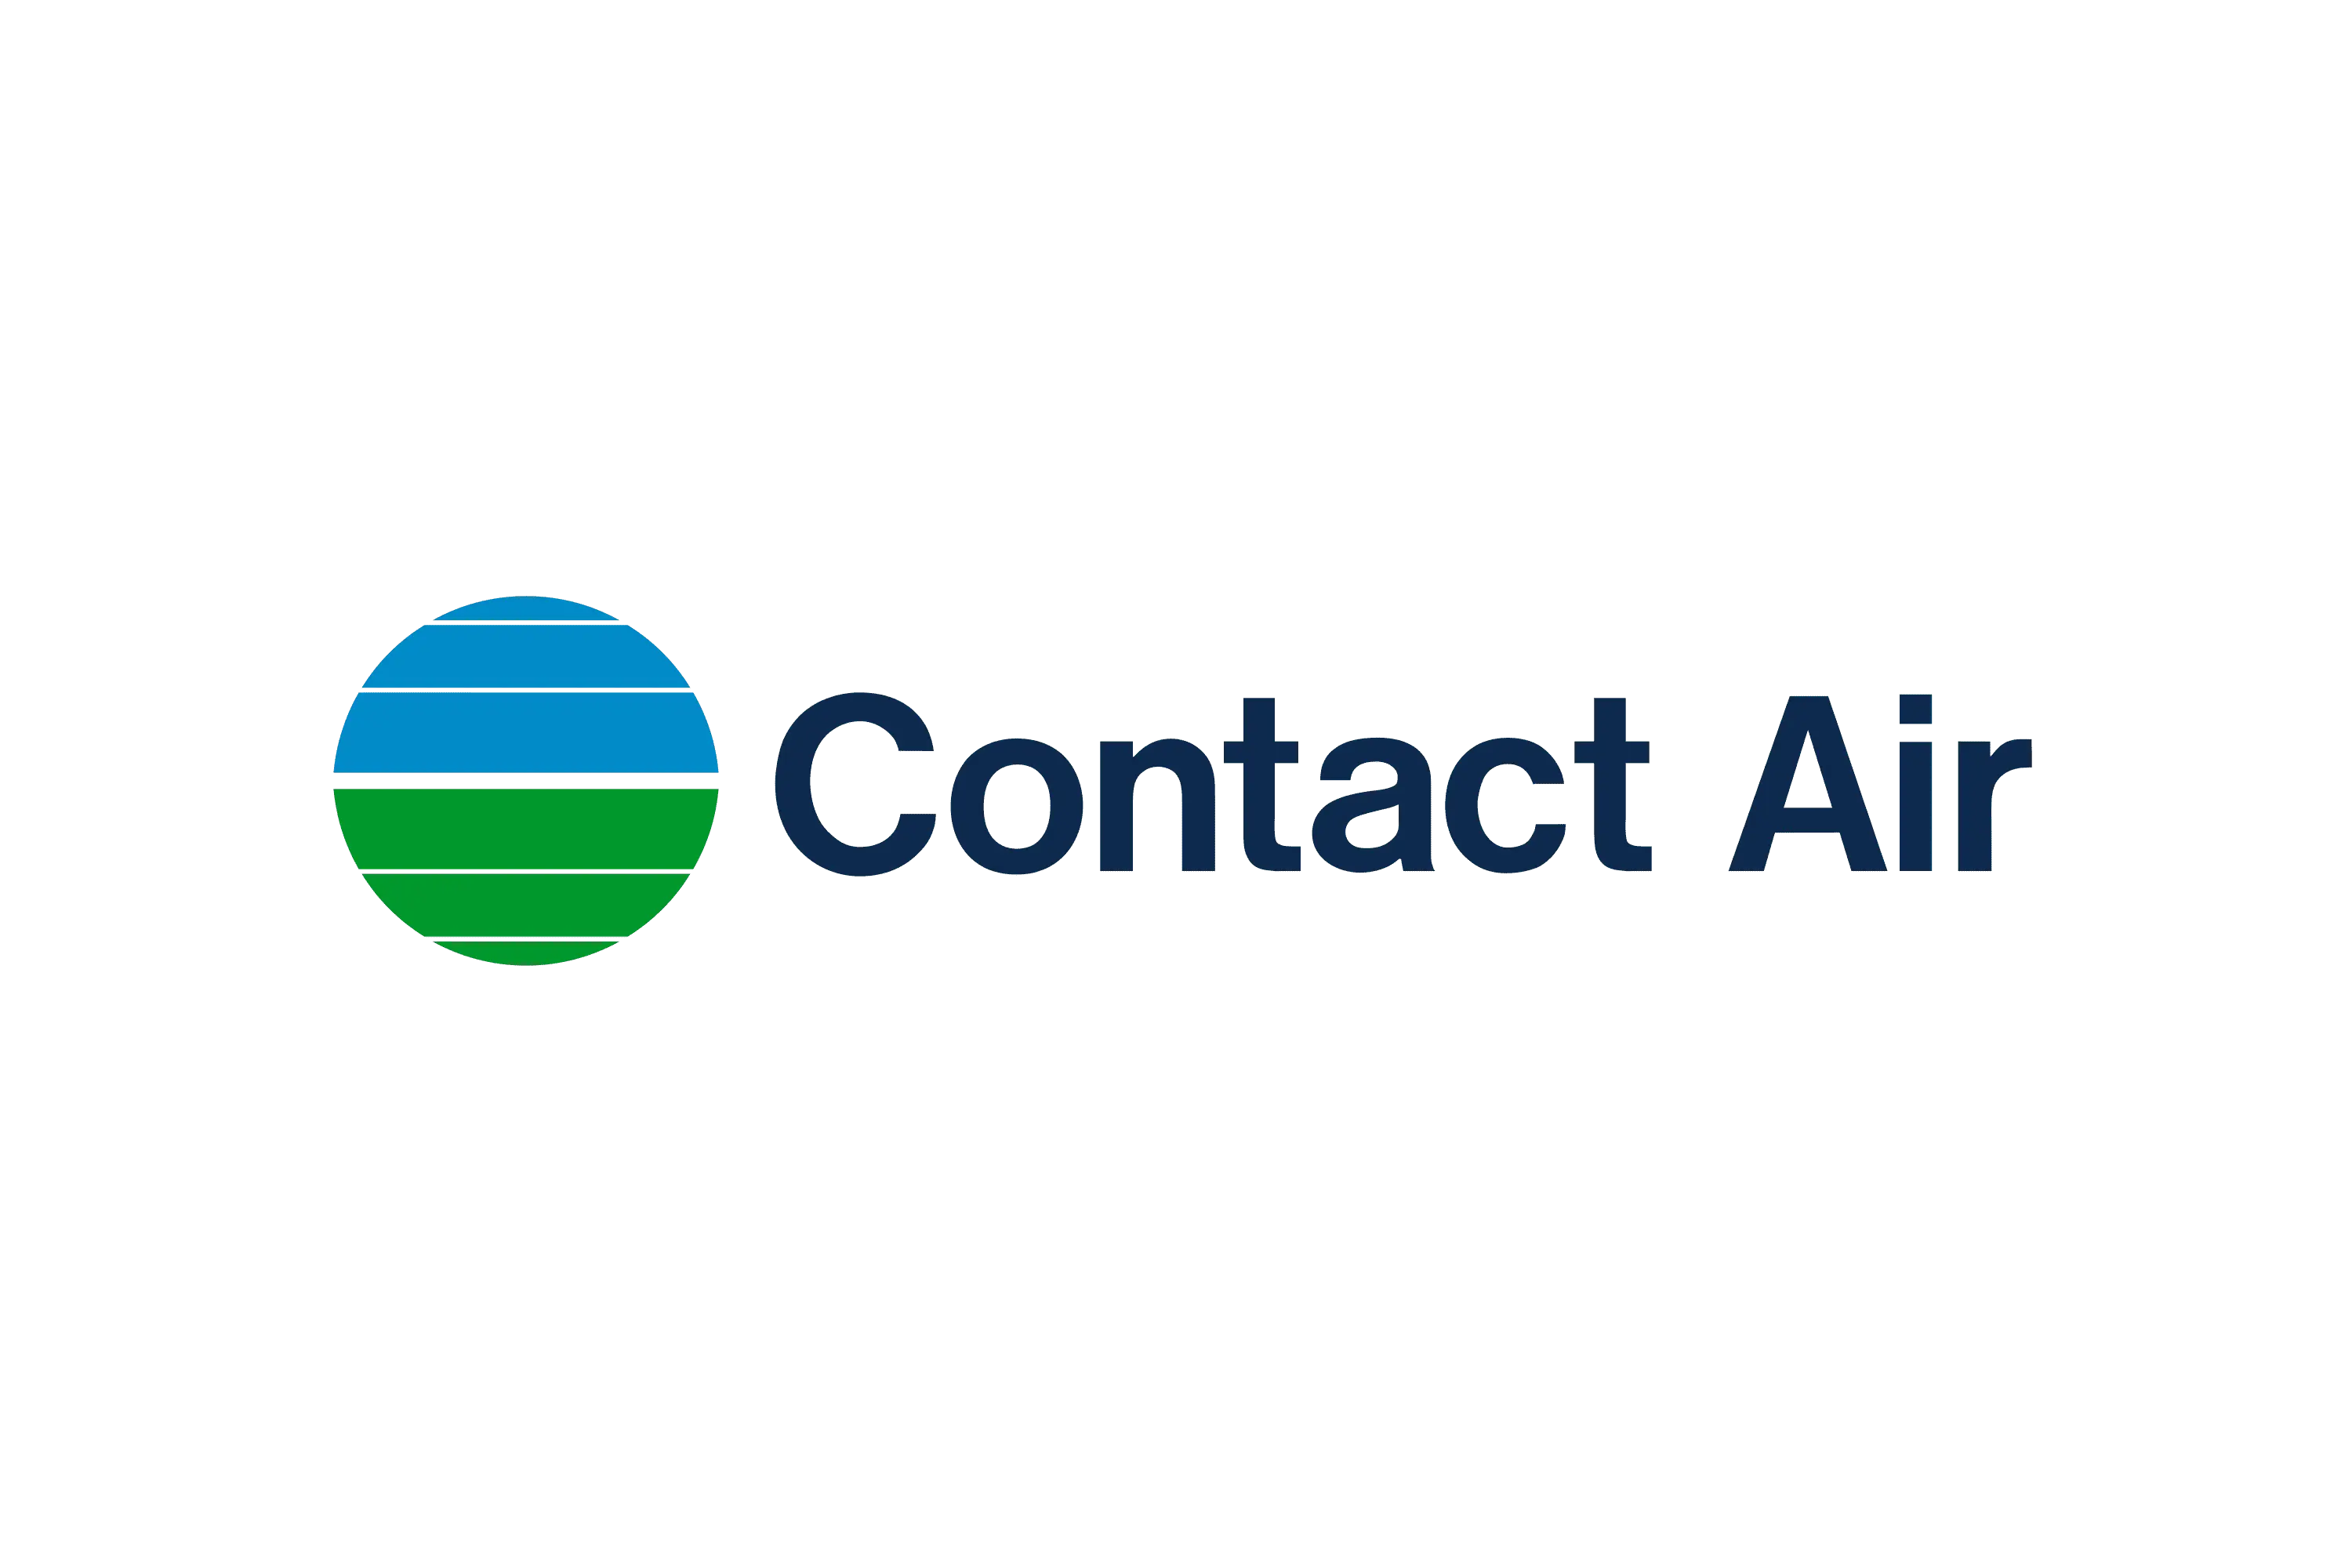 Contact Air